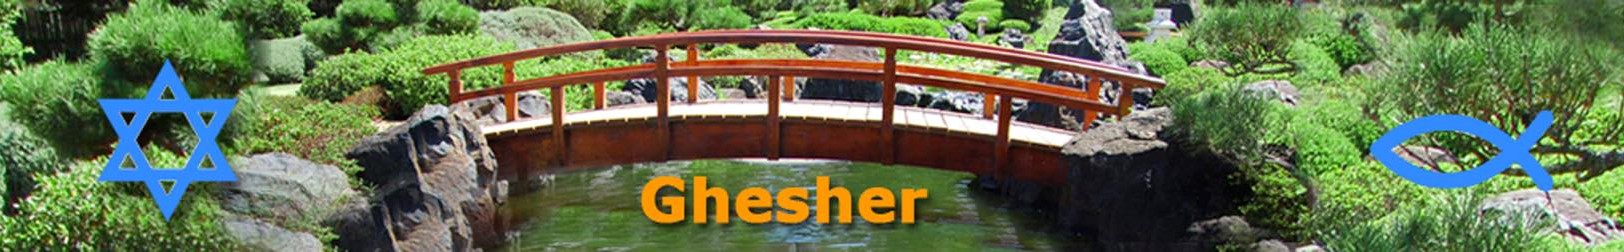 Ghesher